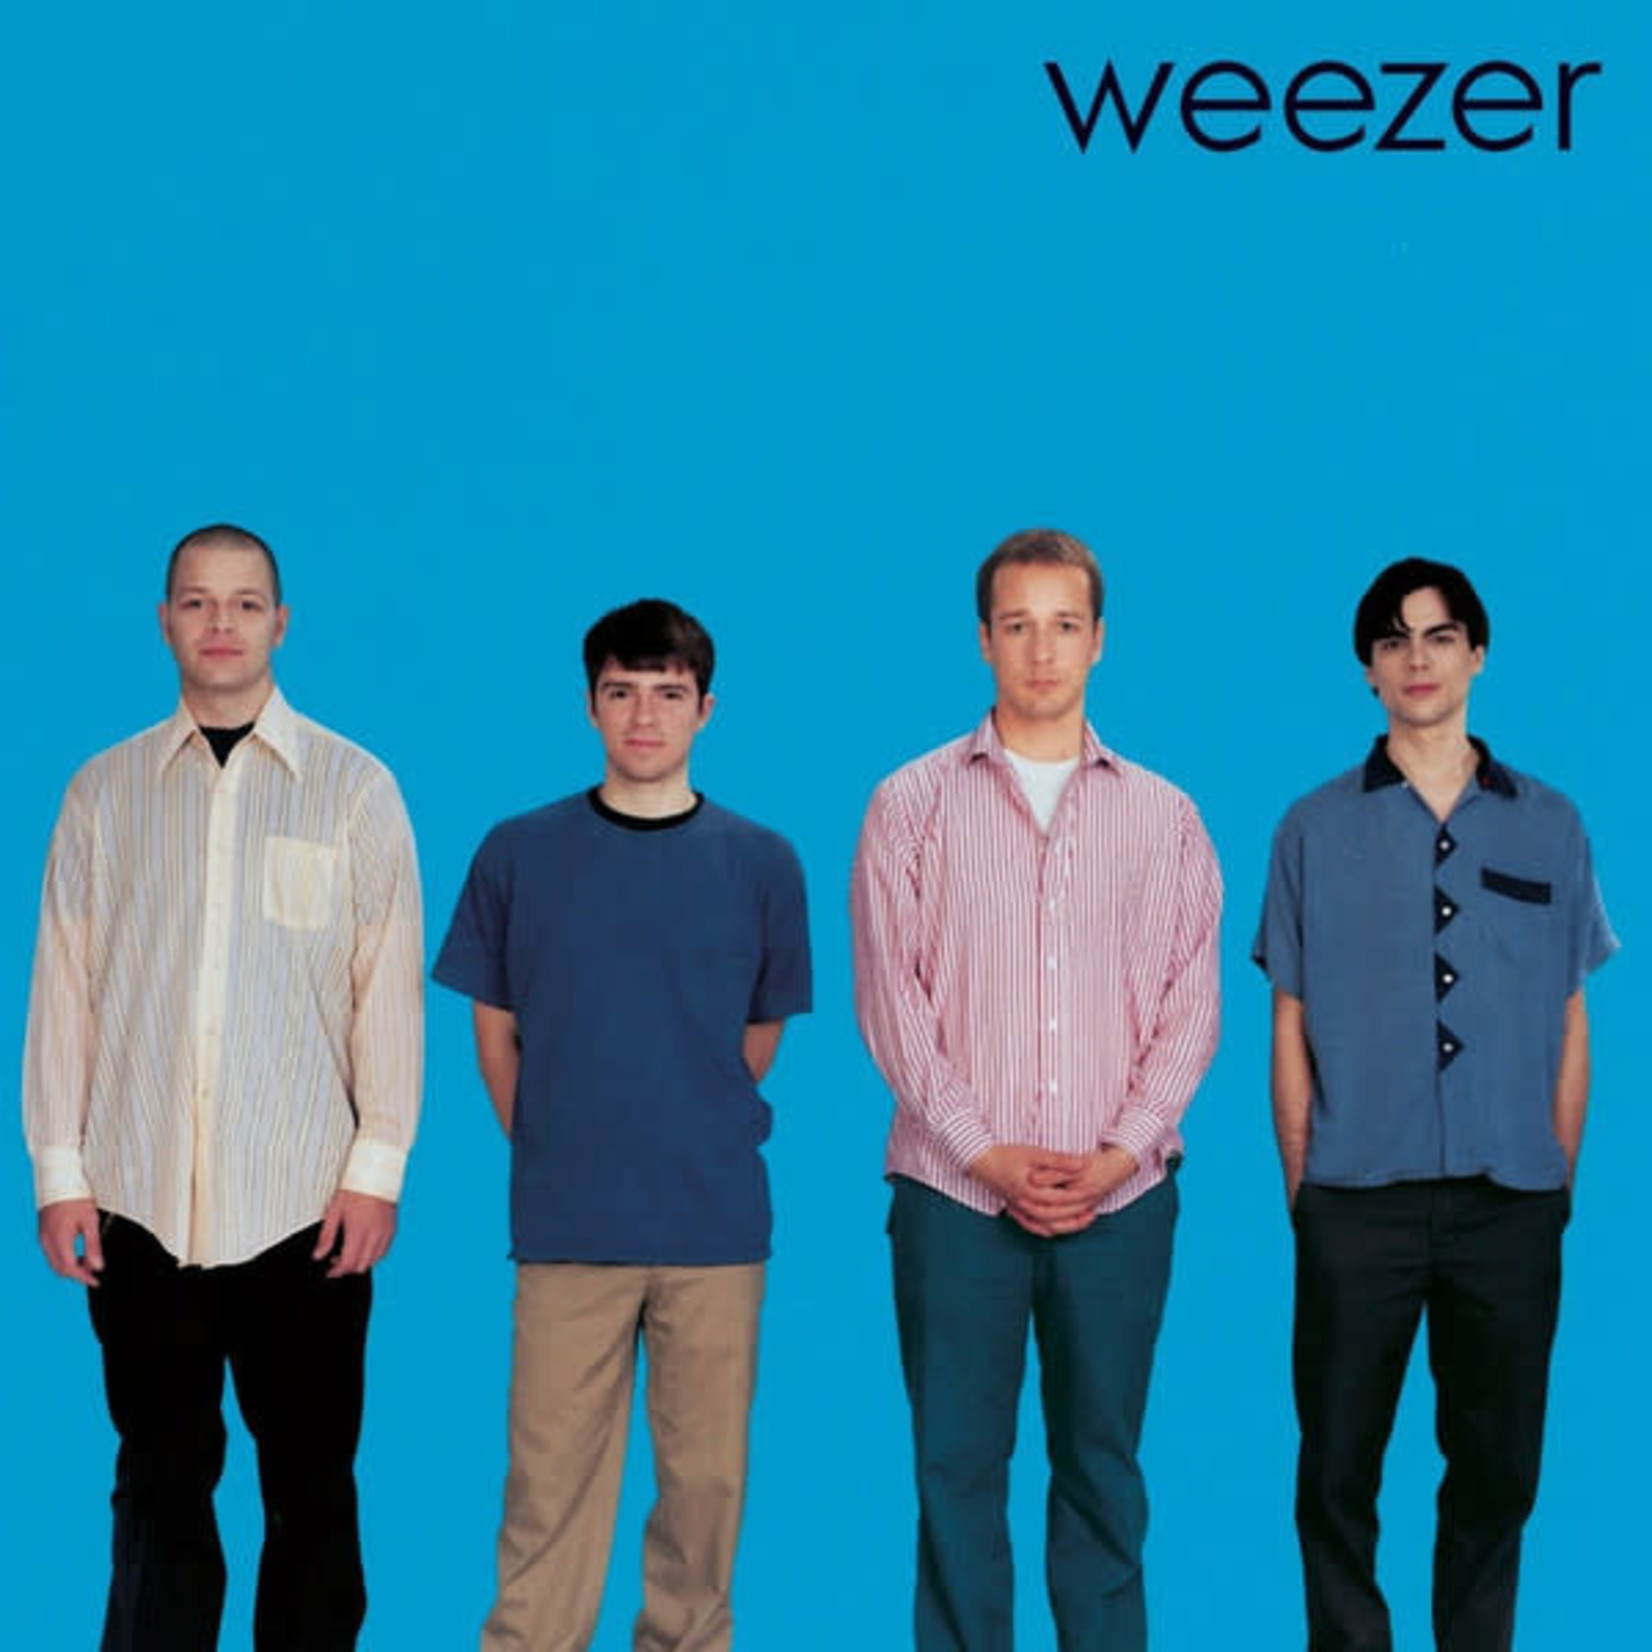 Weezer Weezer – Weezer (Blue Album) (New, LP, Geffen Records, 2016)